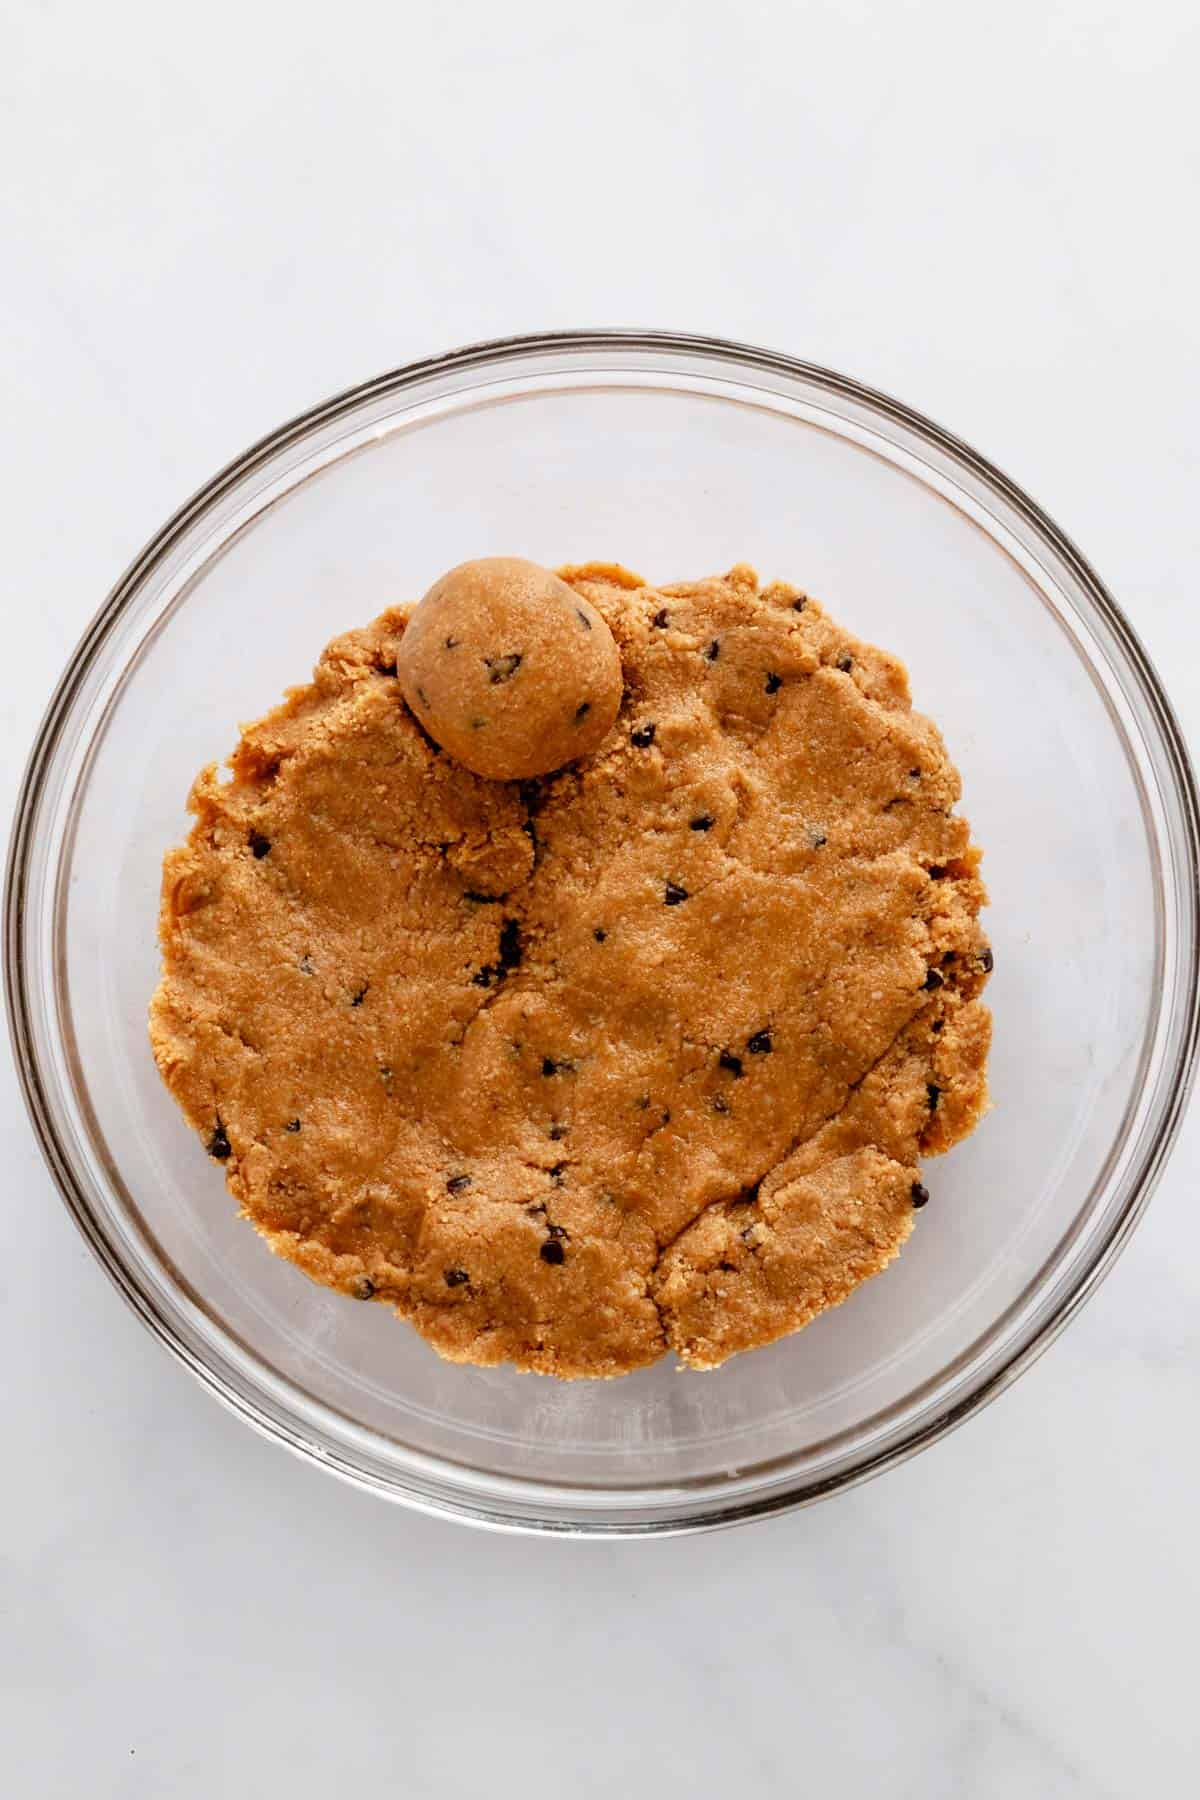 peanut butter cookie dough in a bowl.